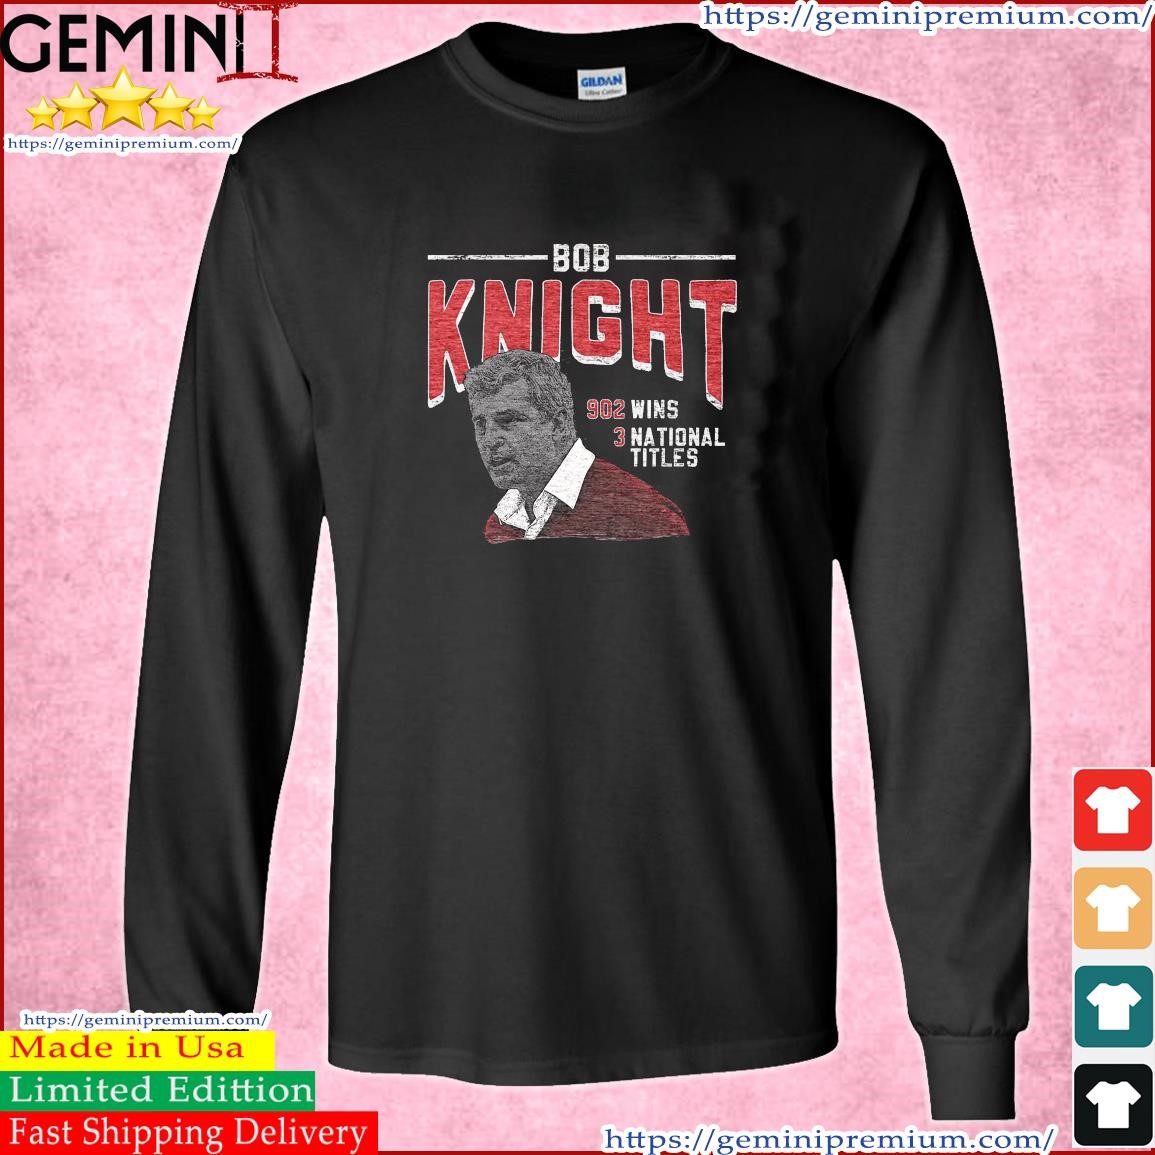 Bob Knight Career Achievements Shirt Long Sleeve Tee.jpg